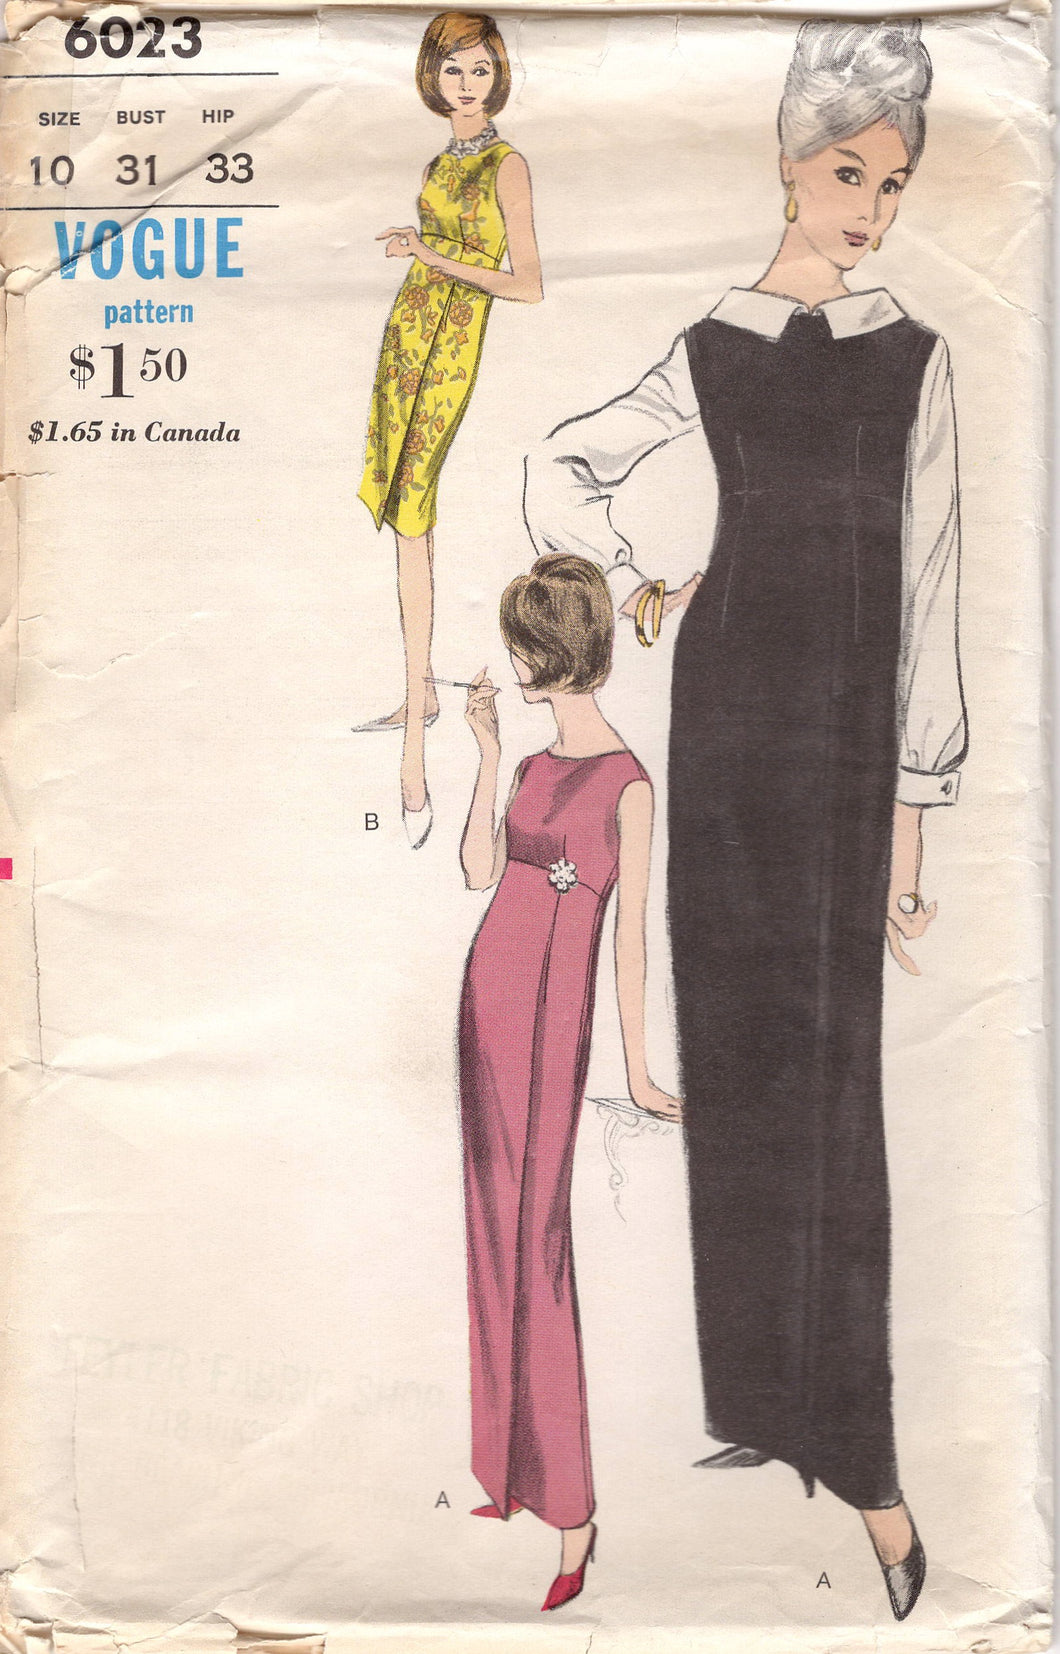 1960's Vogue Sheath Dress and Blouse Pattern  - Bust 31